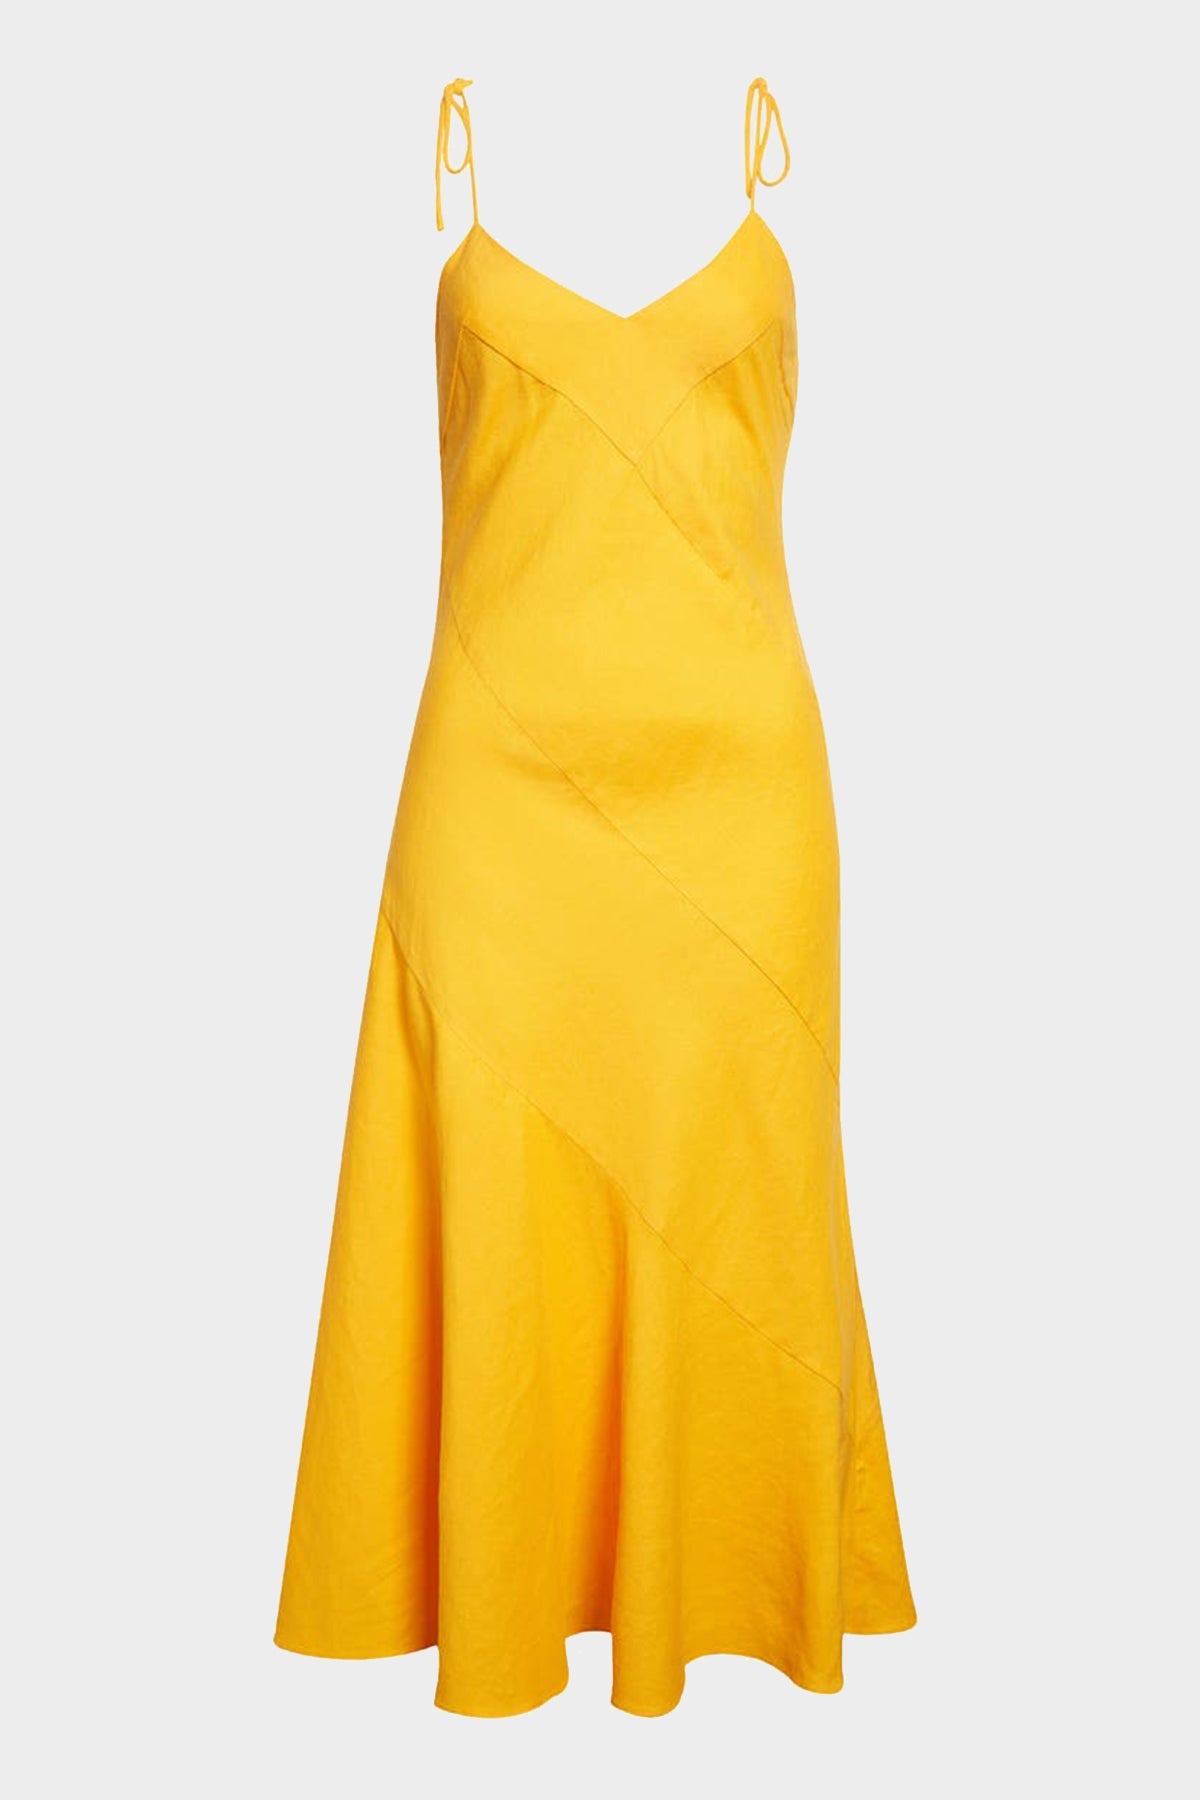 Veda Dress in Marigold - shop-olivia.com